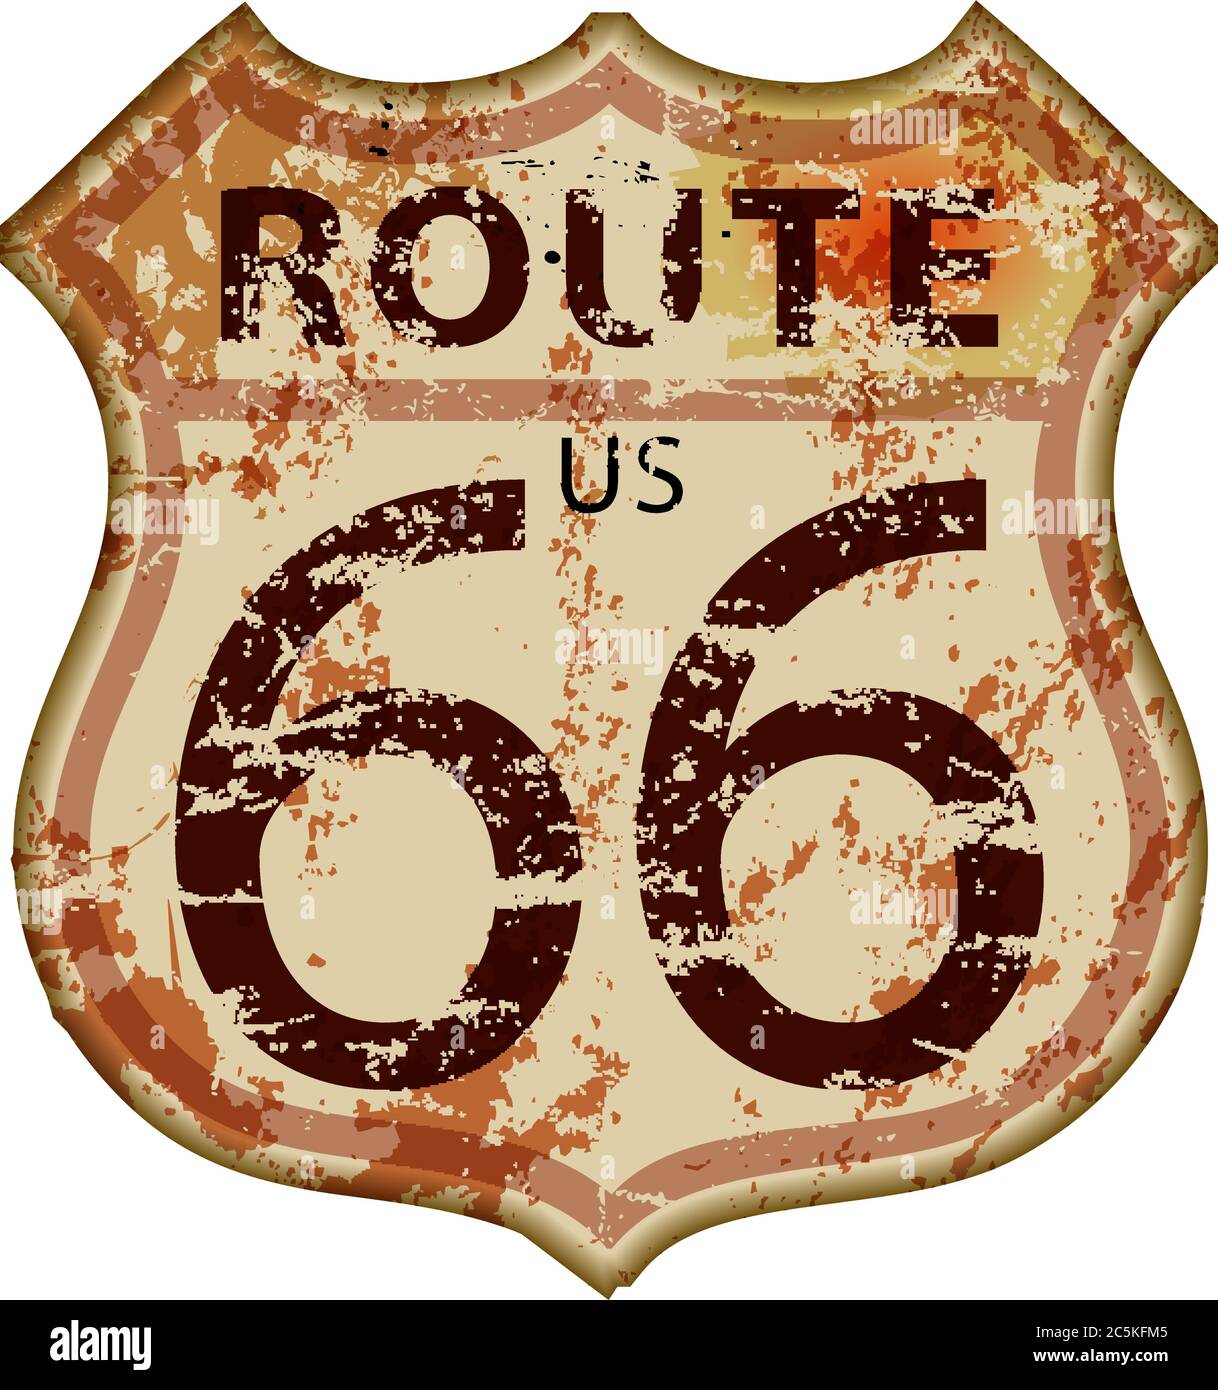 Route 66 Schild, gestürzt grungy Straßenschild, Retro-Stil, Vektor-Illustration Stock Vektor